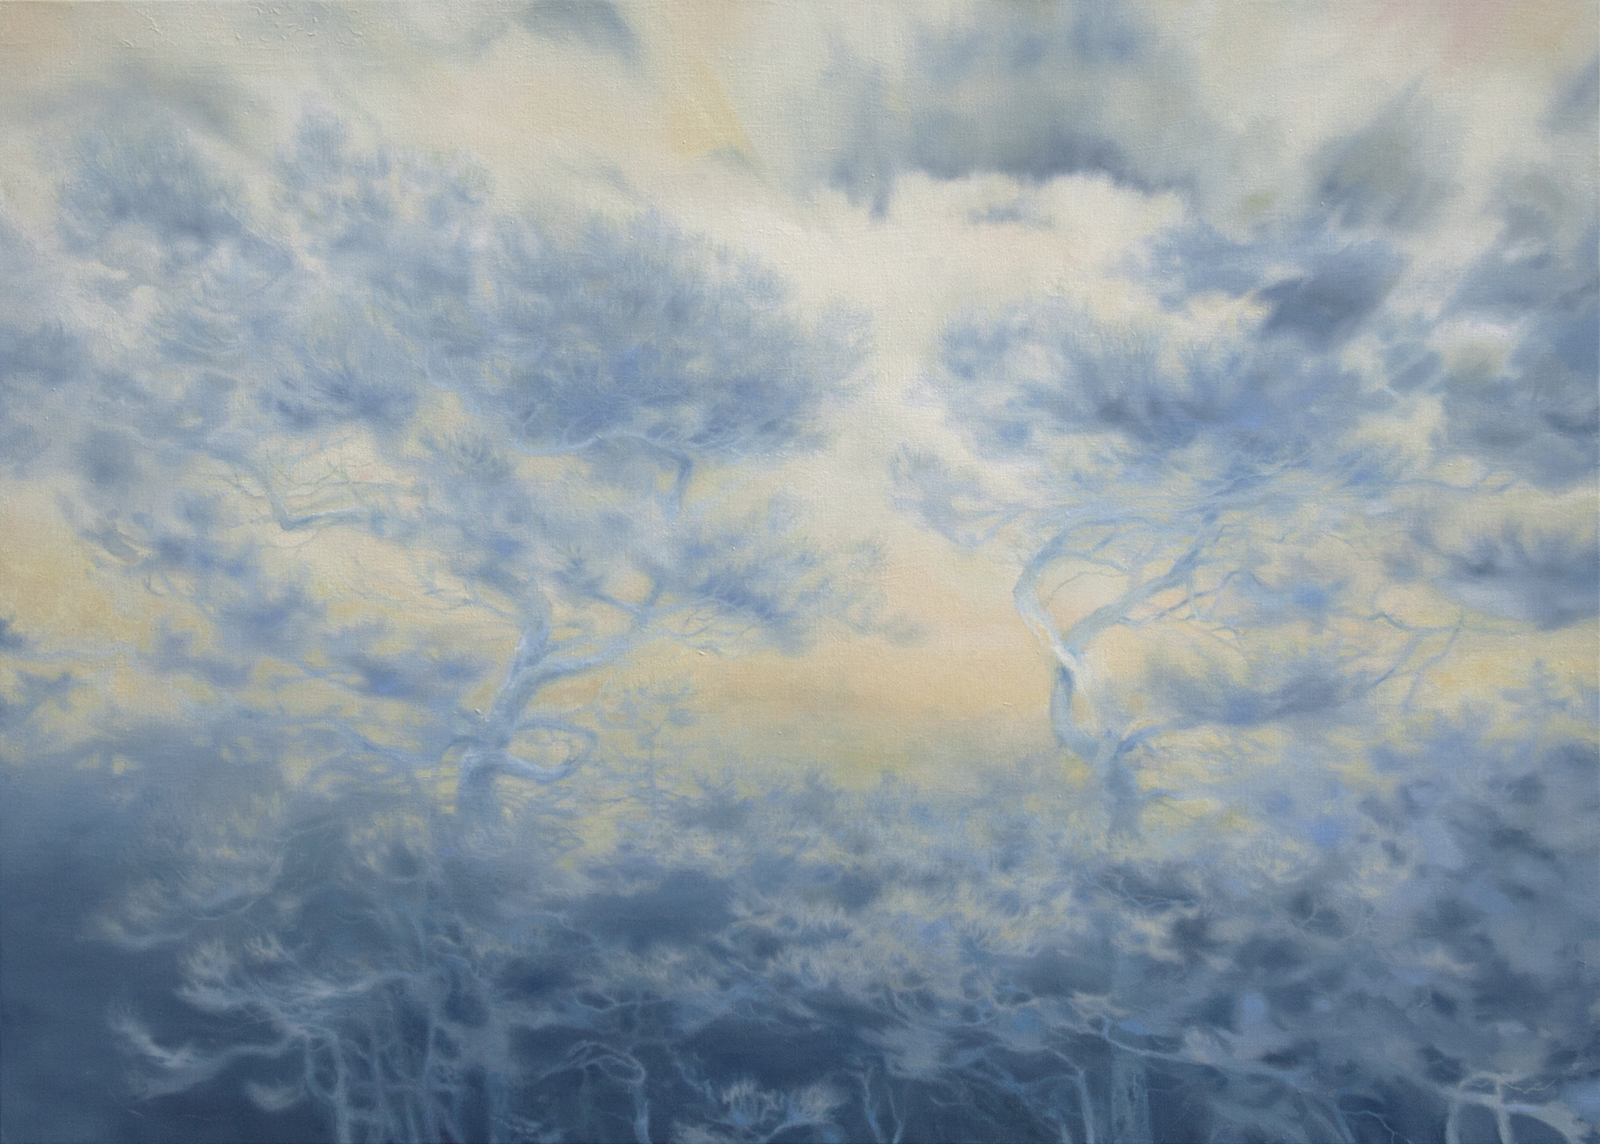 Waldriesen 2016, 100 x 140 cm, Öl auf Leinwand   Giant Trees 2016, oil on canvas